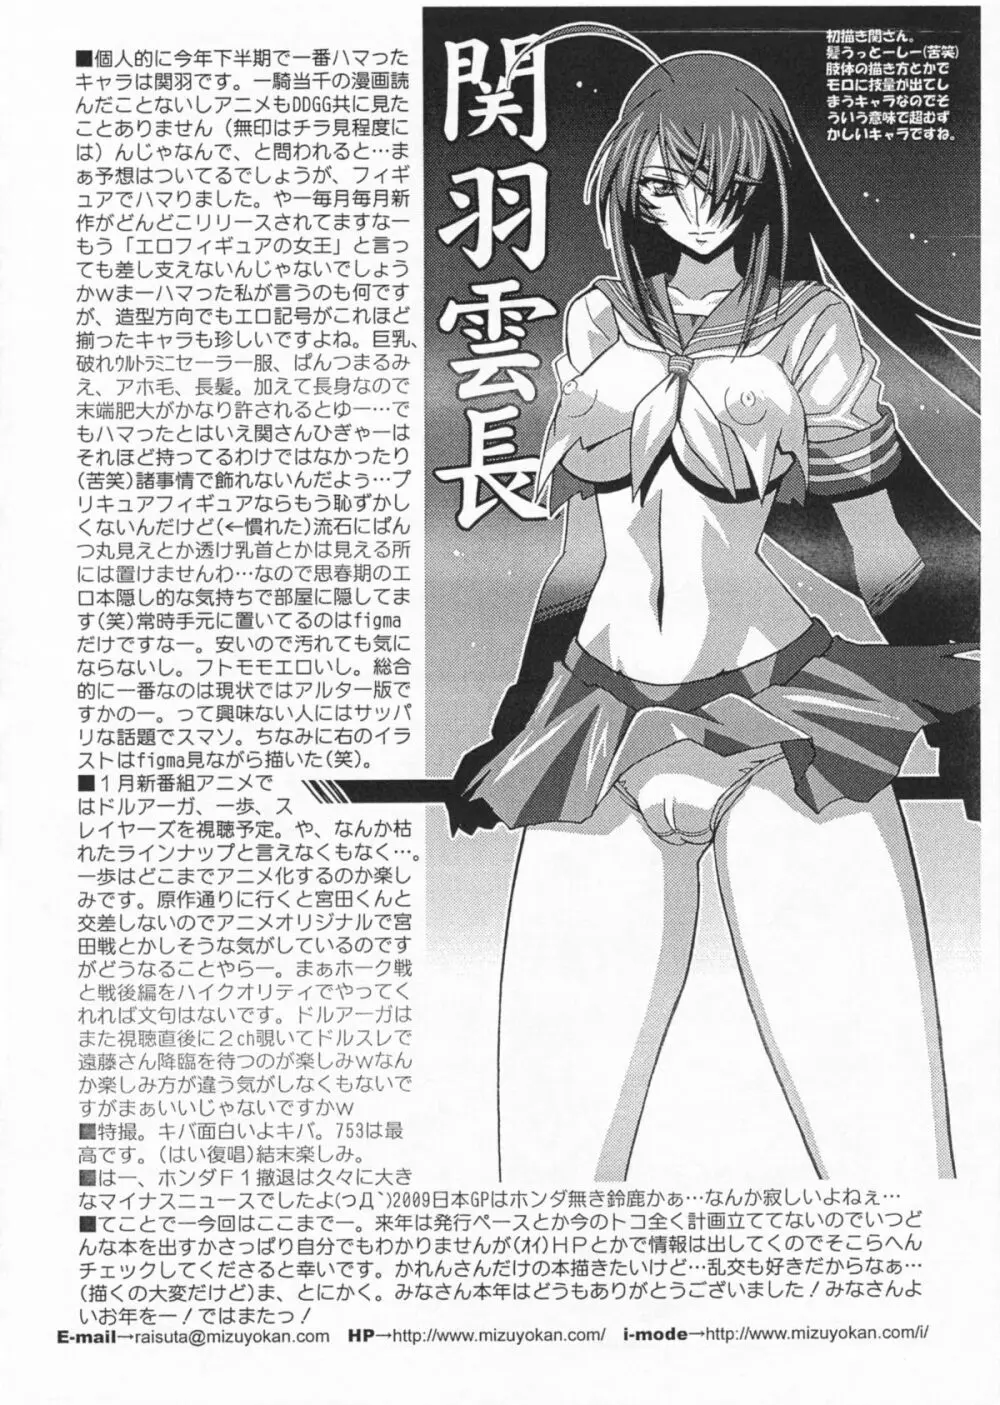 Raisuta News. Vol.143 3ページ